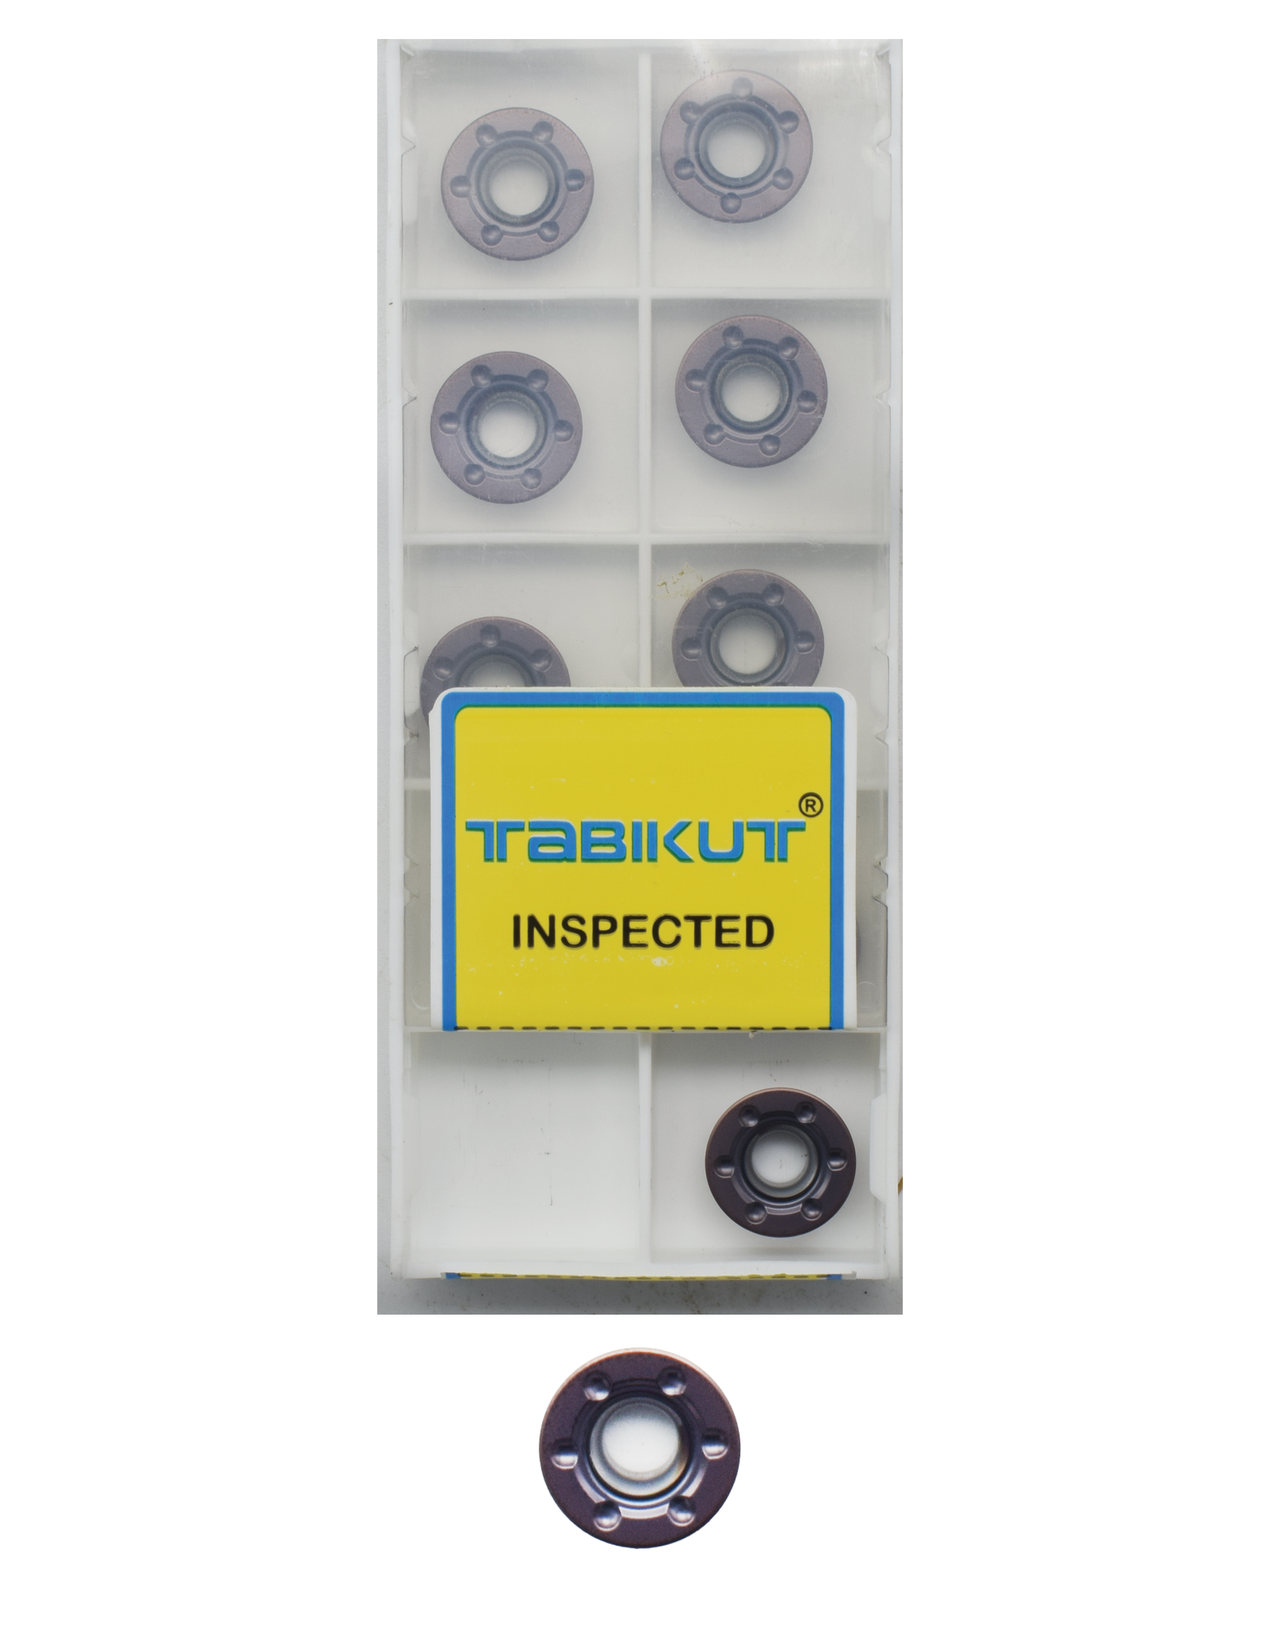 TABIKUT R6 Carbide Insert RPMT1204 T15 Grade pack of 10